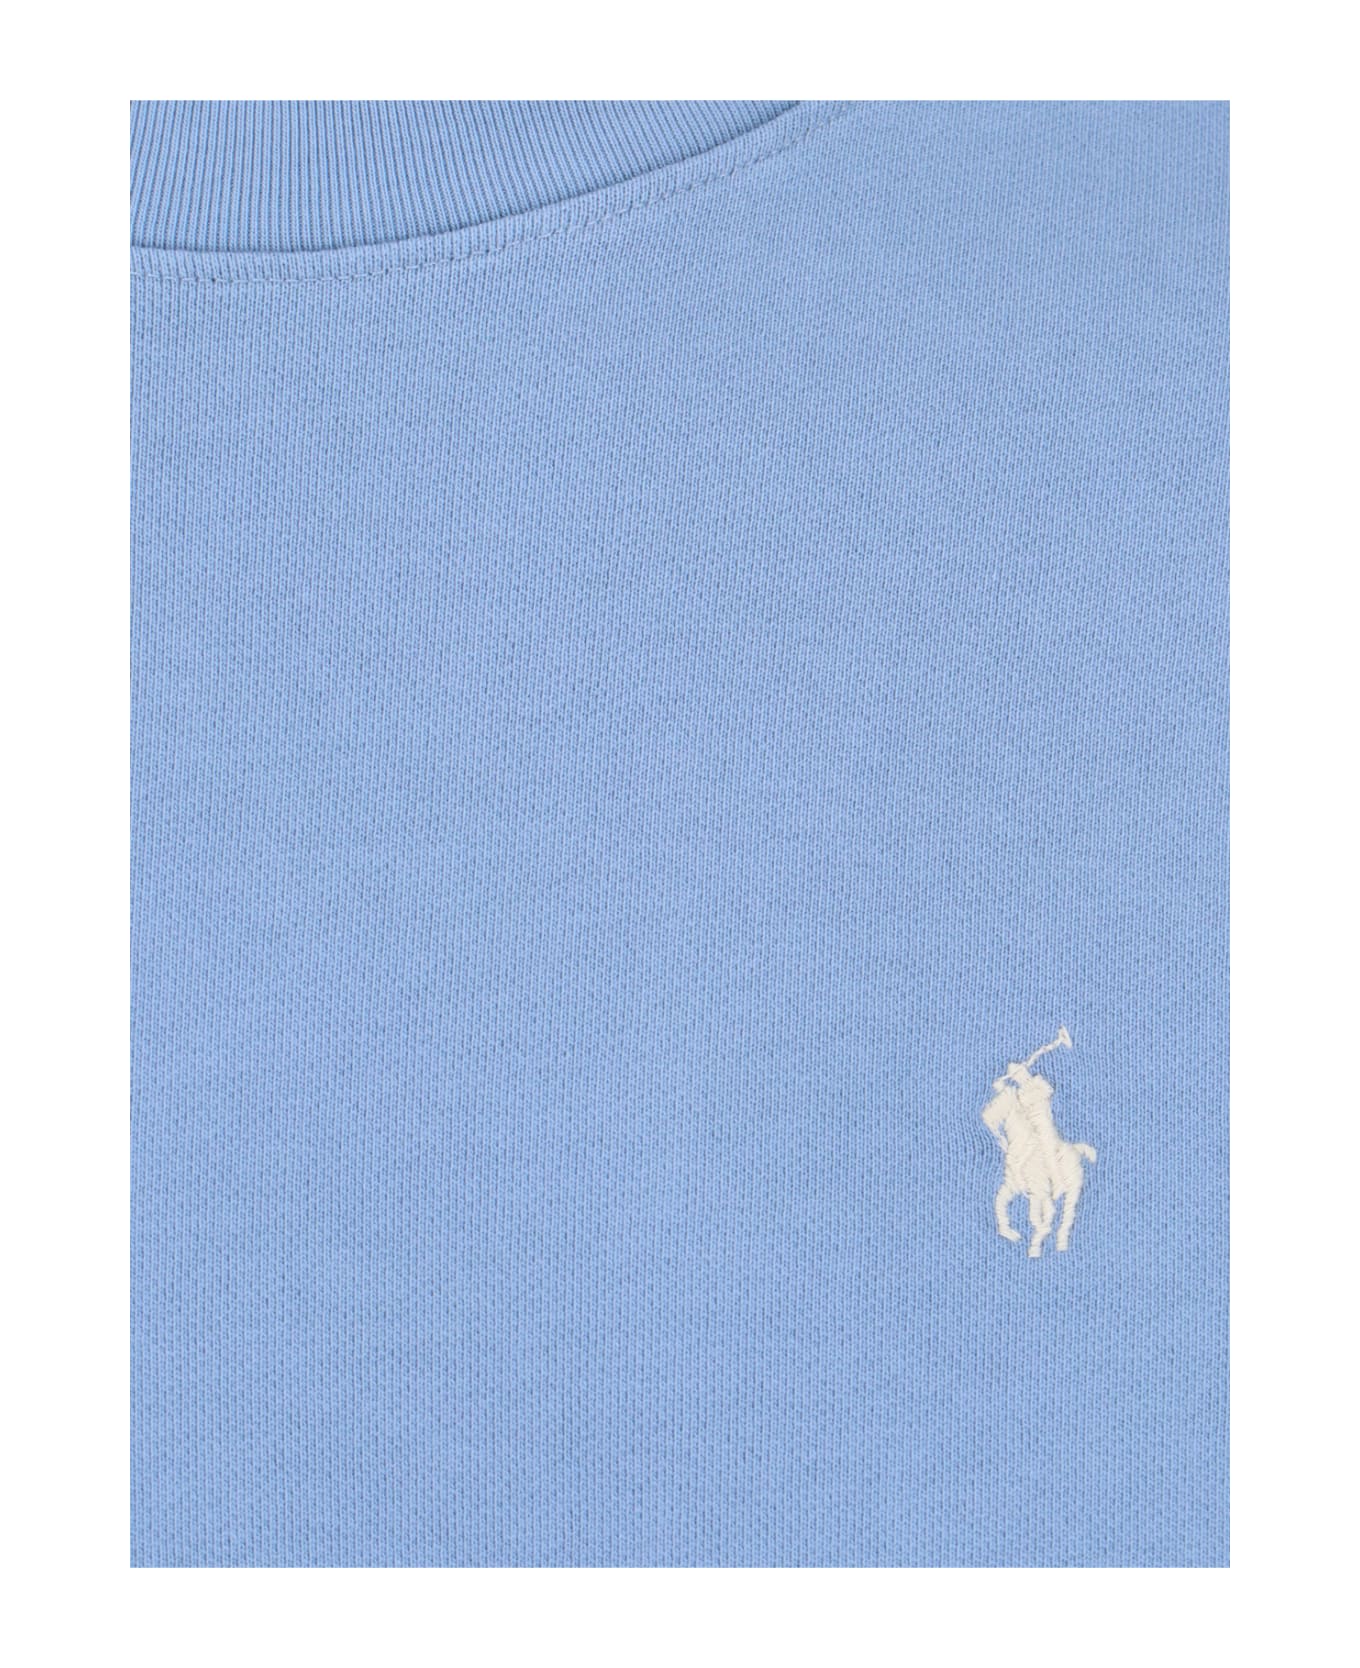 Polo Ralph Lauren Logo Crewneck Sweatshirt - BLUE フリース